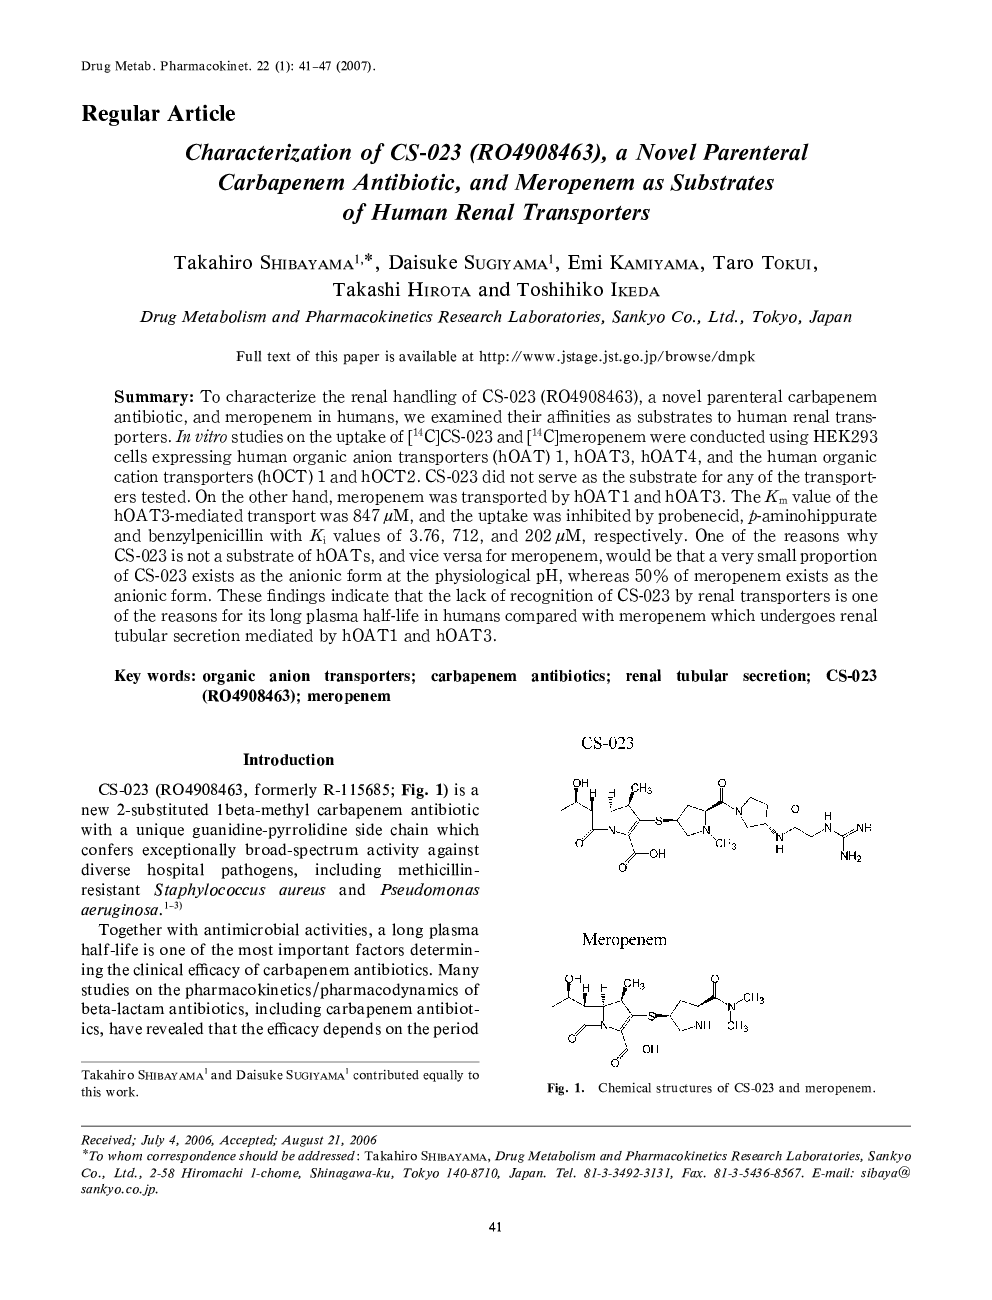 Characterization of CS-023 (RO4908463), a Novel Parenteral Carbapenem Antibiotic, and Meropenem as Substrates of Human Renal Transporters 